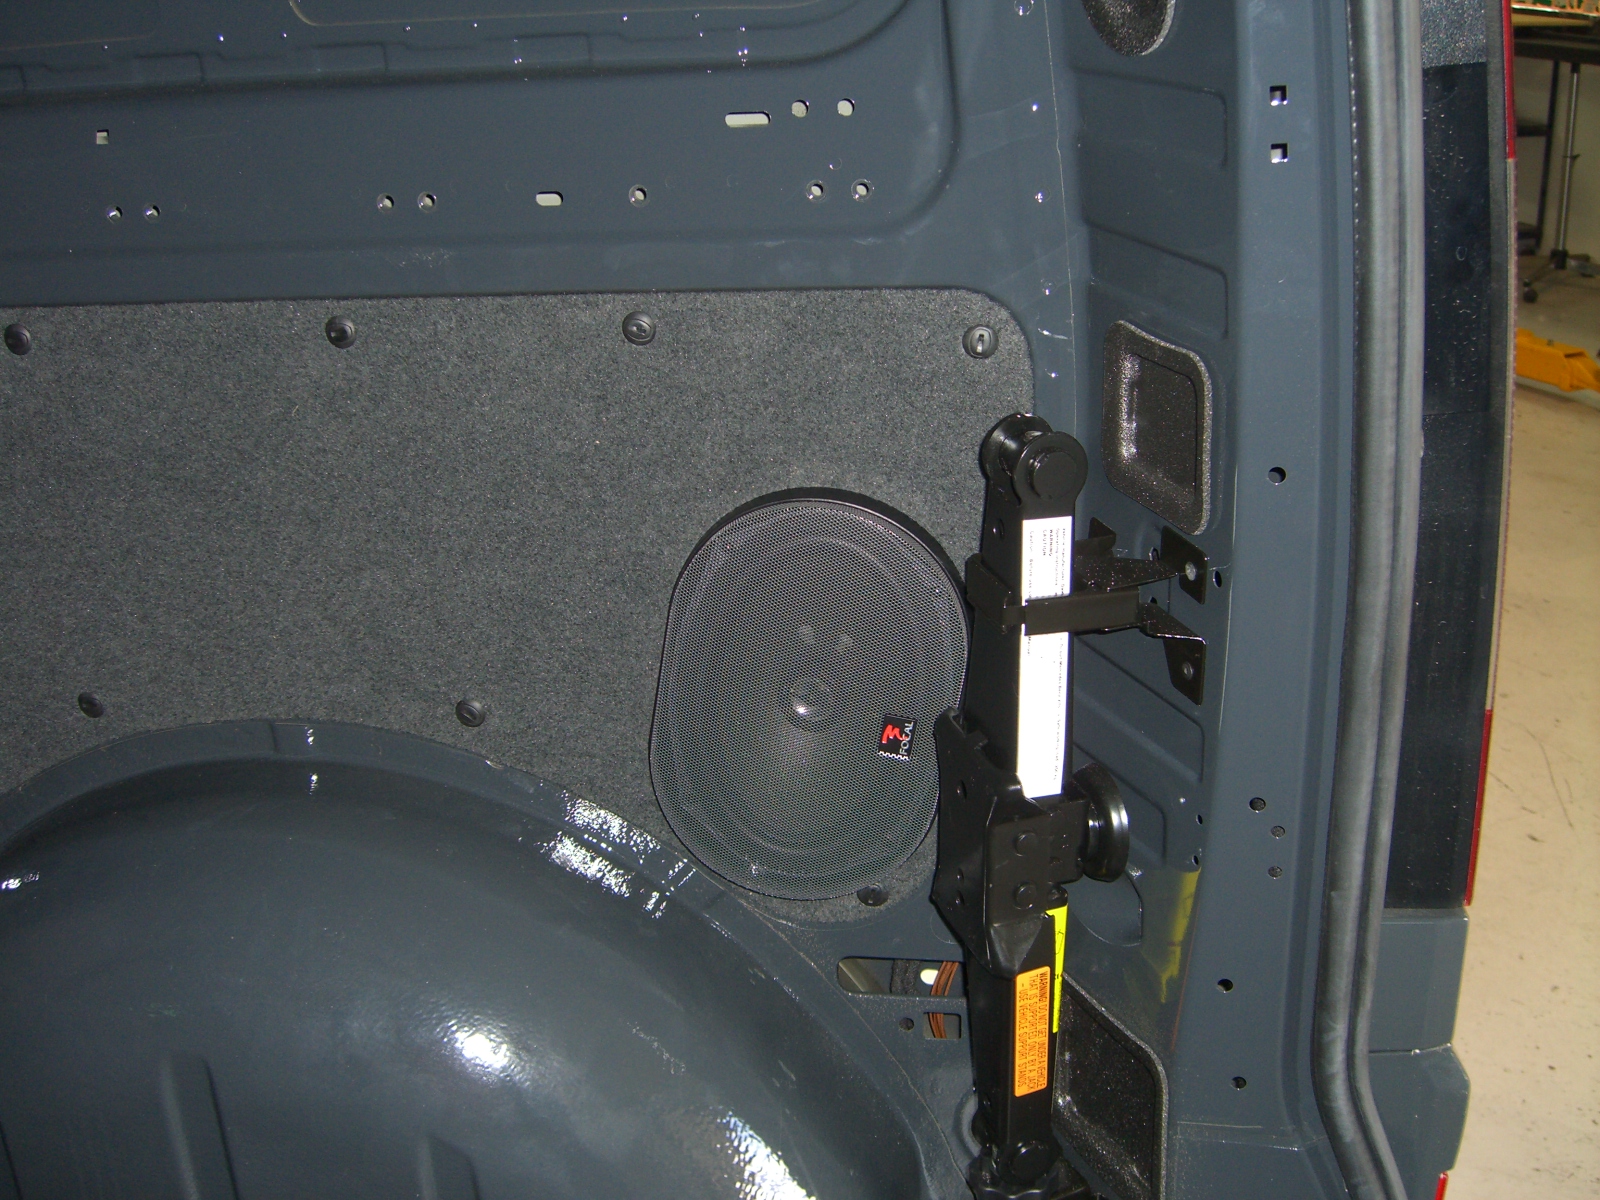 Mercedes Benz Vito 2010, custom rear speaker panels, subwoofer and amplifier install, Pioneer DVD, USB, CD, Radio